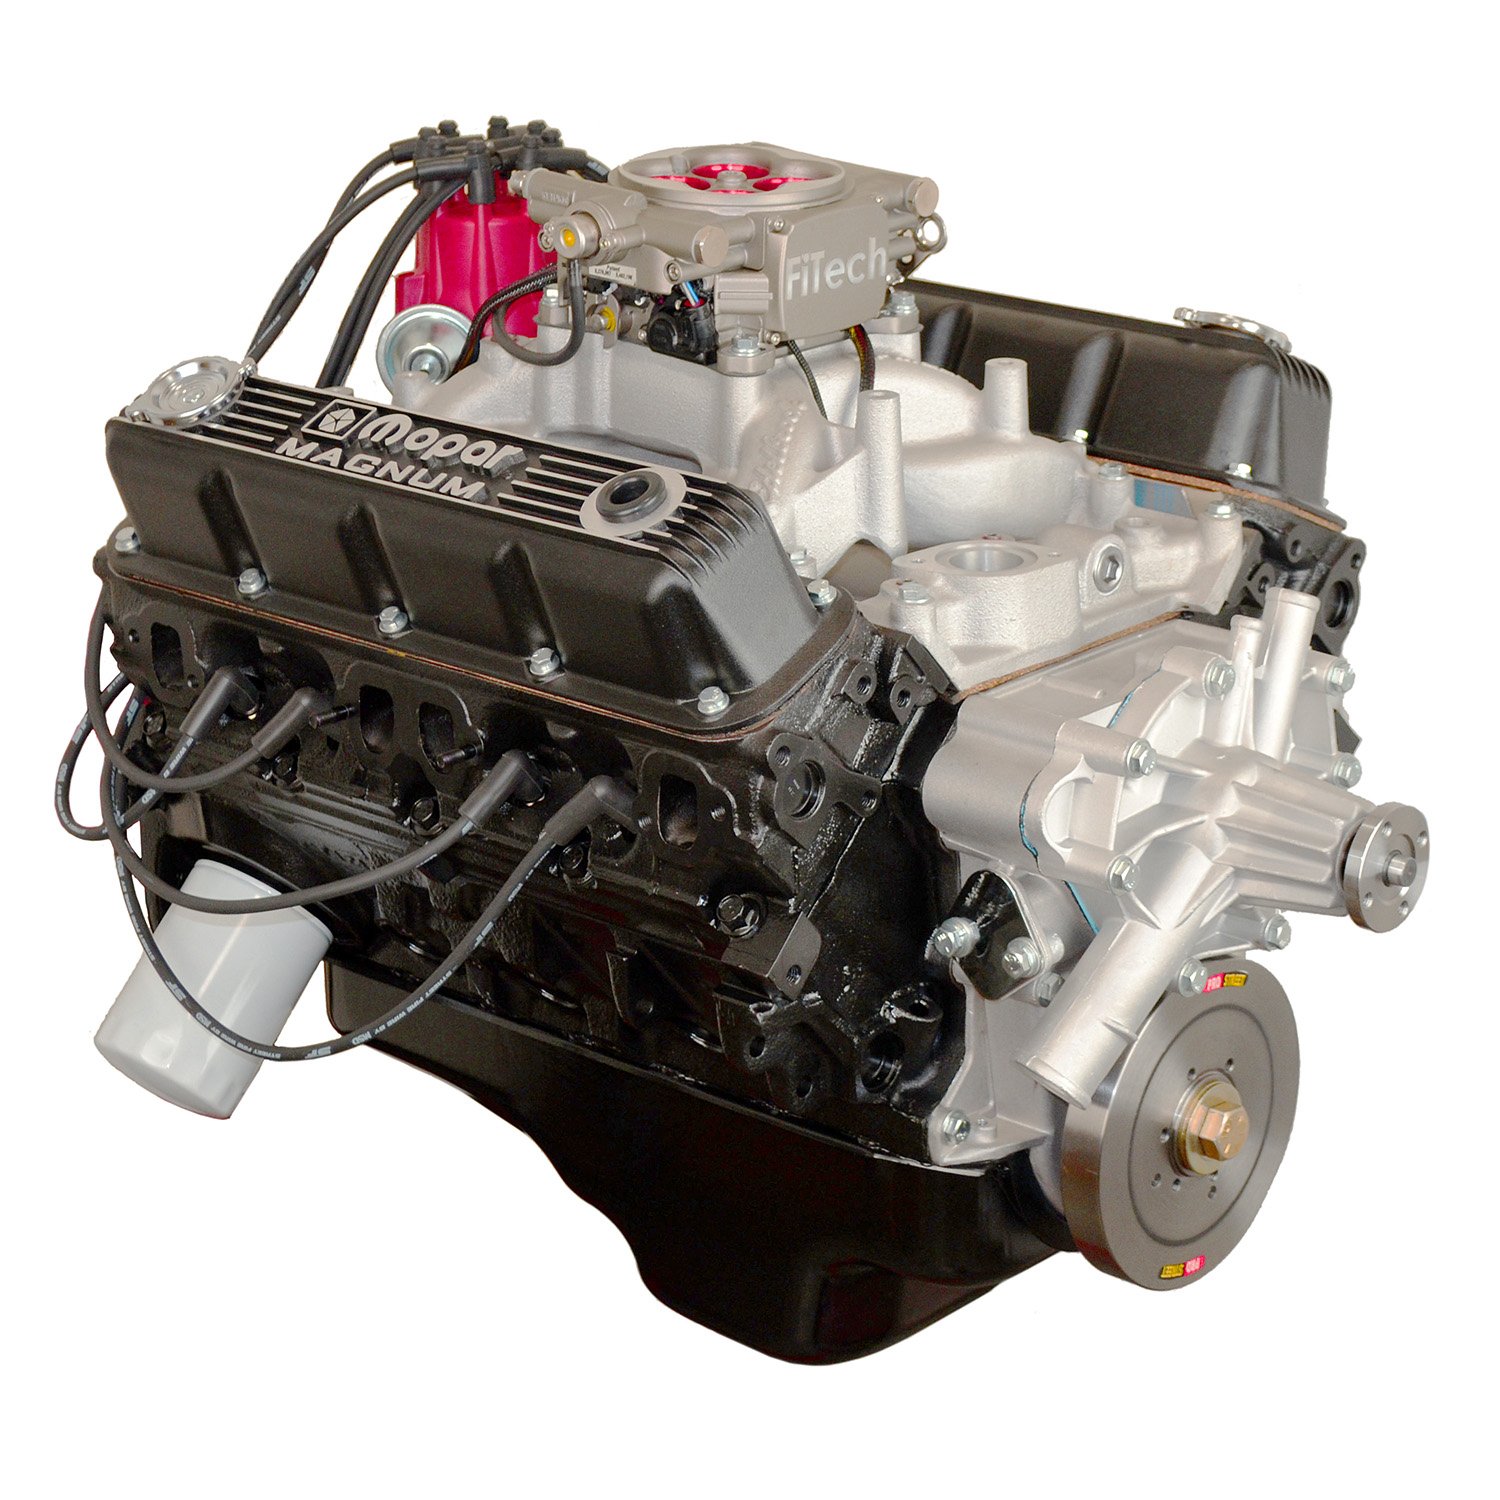 HP73C-EFI High Performance Crate Engine Small Block Chrysler 360ci / 320HP / 410TQ